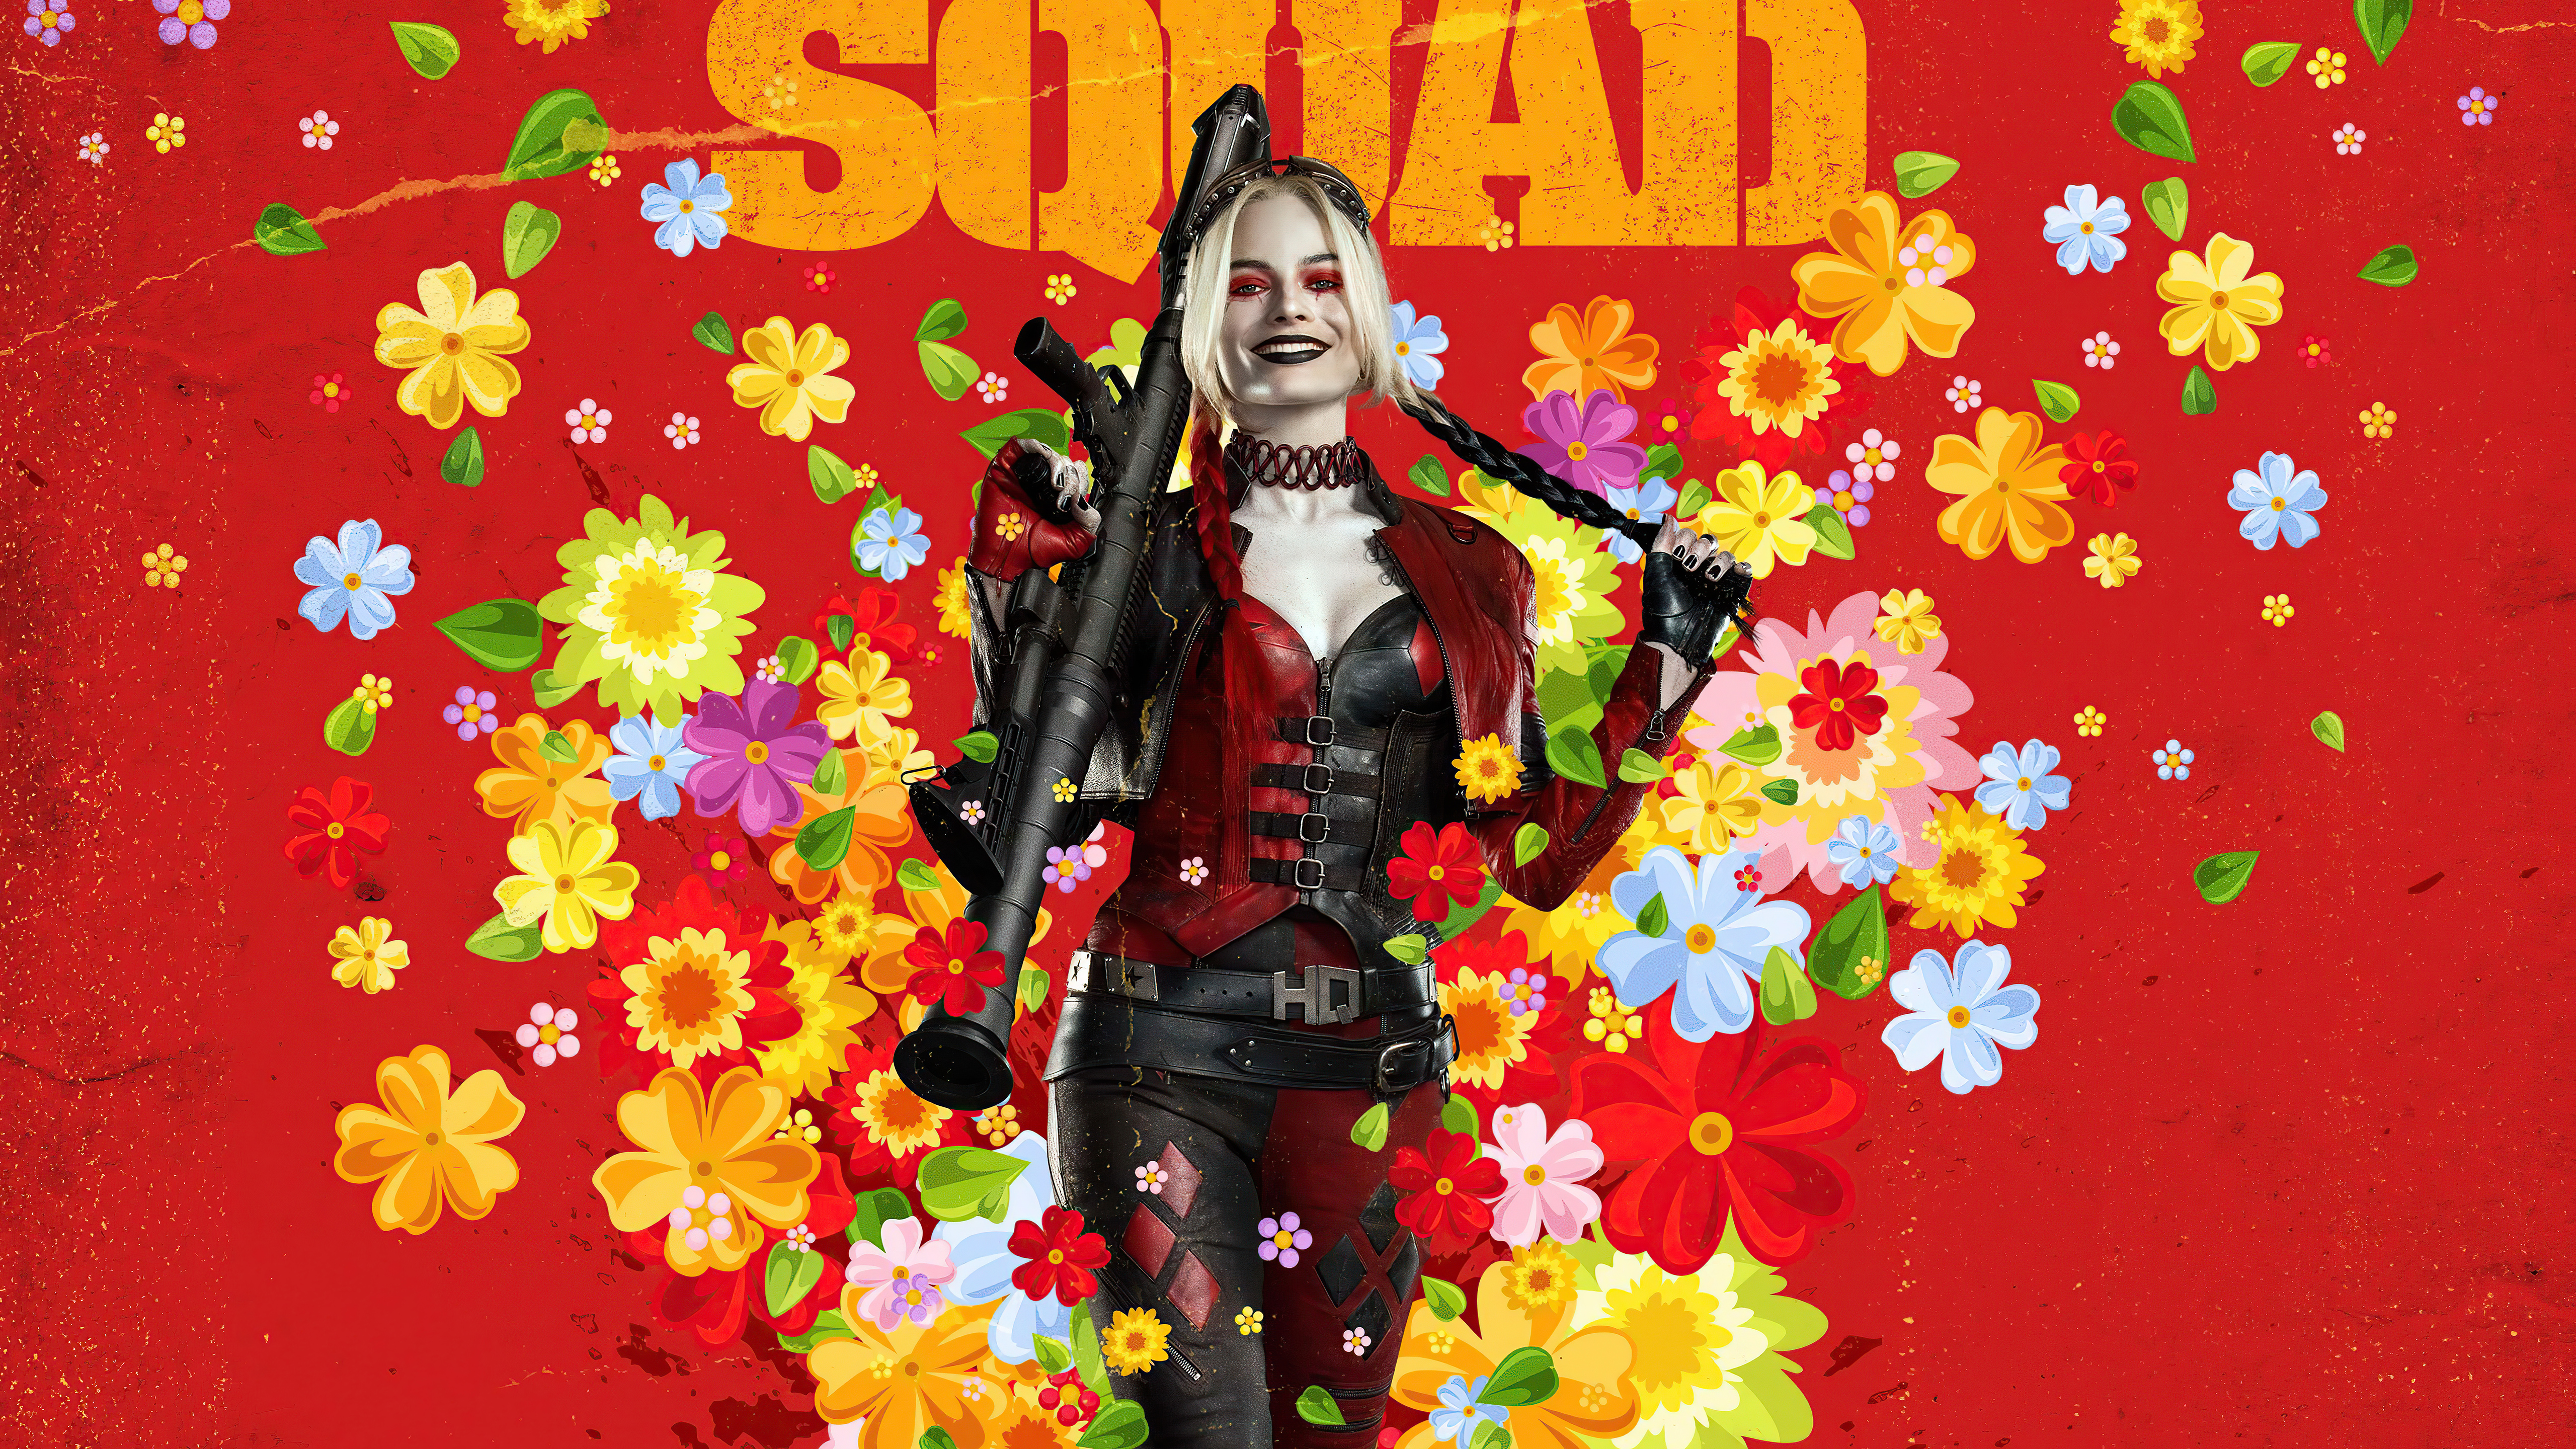 Wallpaper 4k Harley Quinn The Suicide Squad 4k Wallpaper